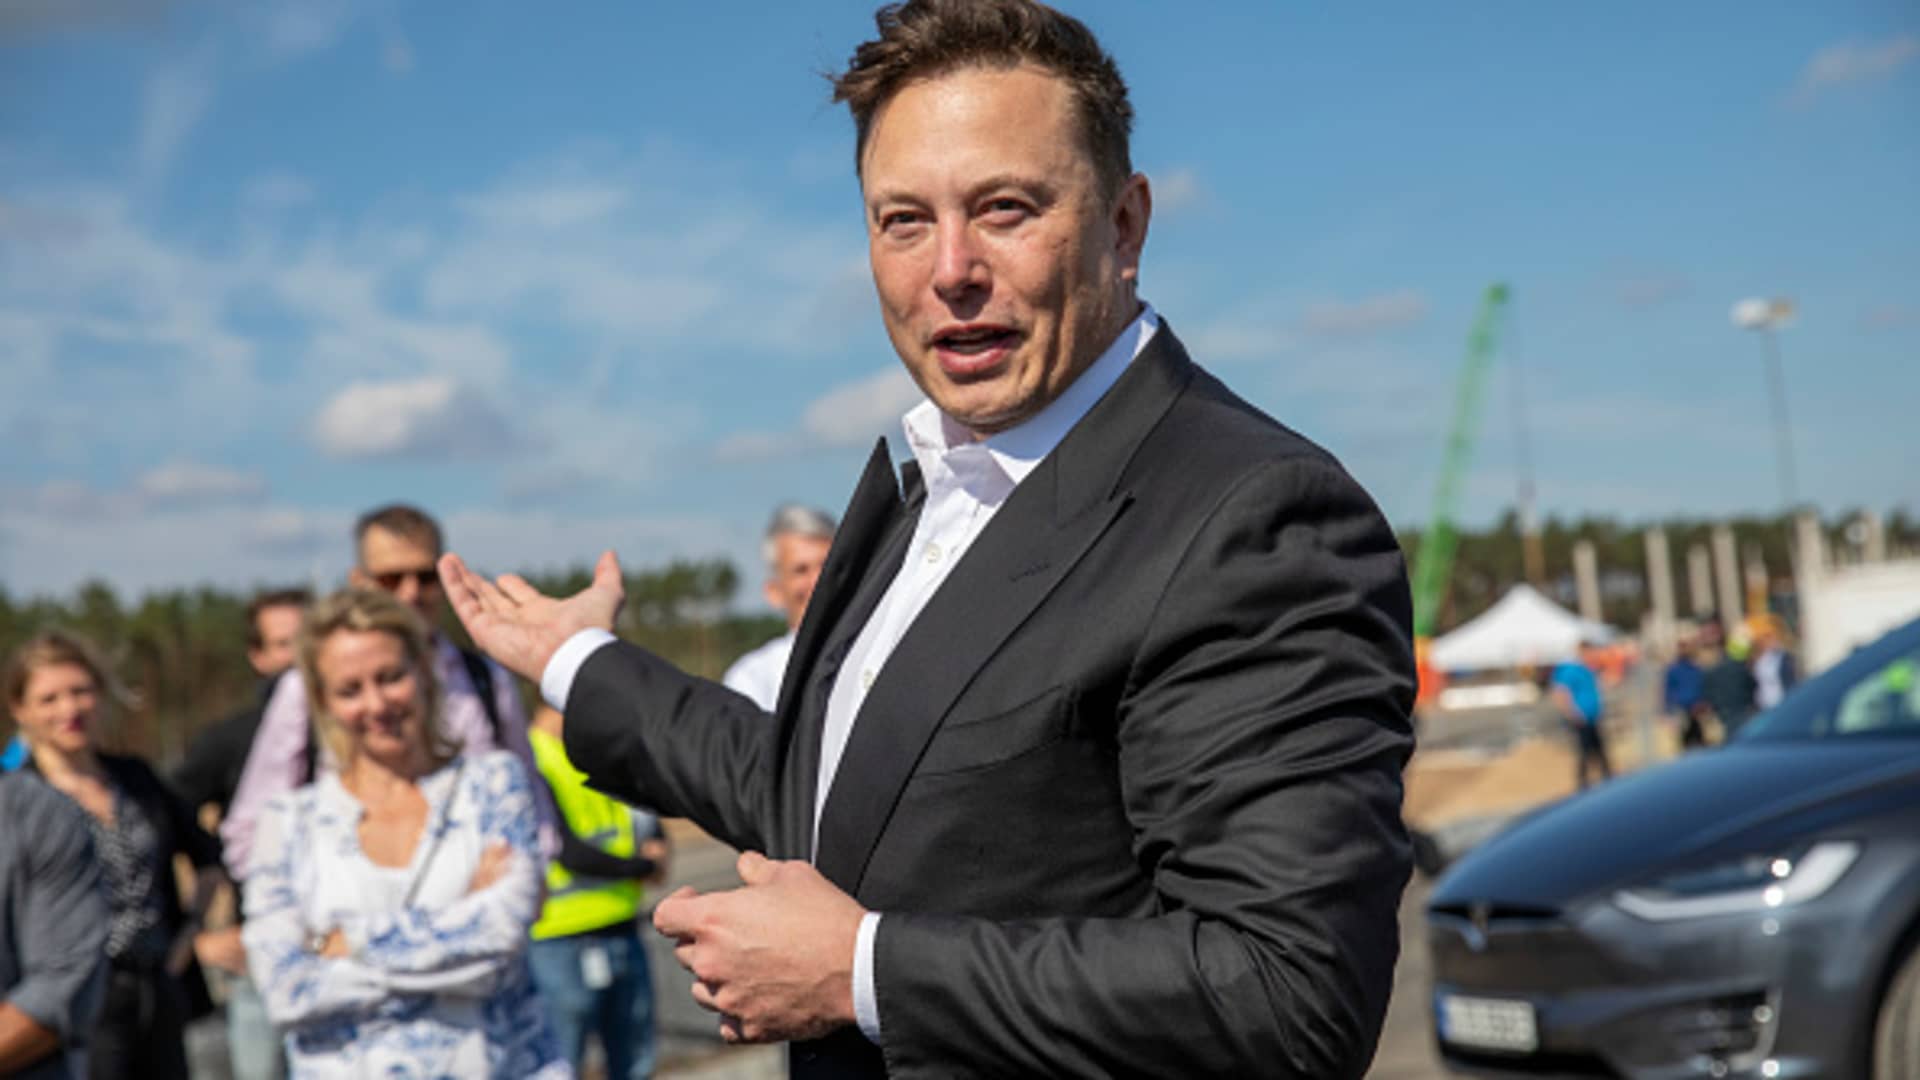 Elon Musk deletes tweets critical of Twitter after weekend barrage